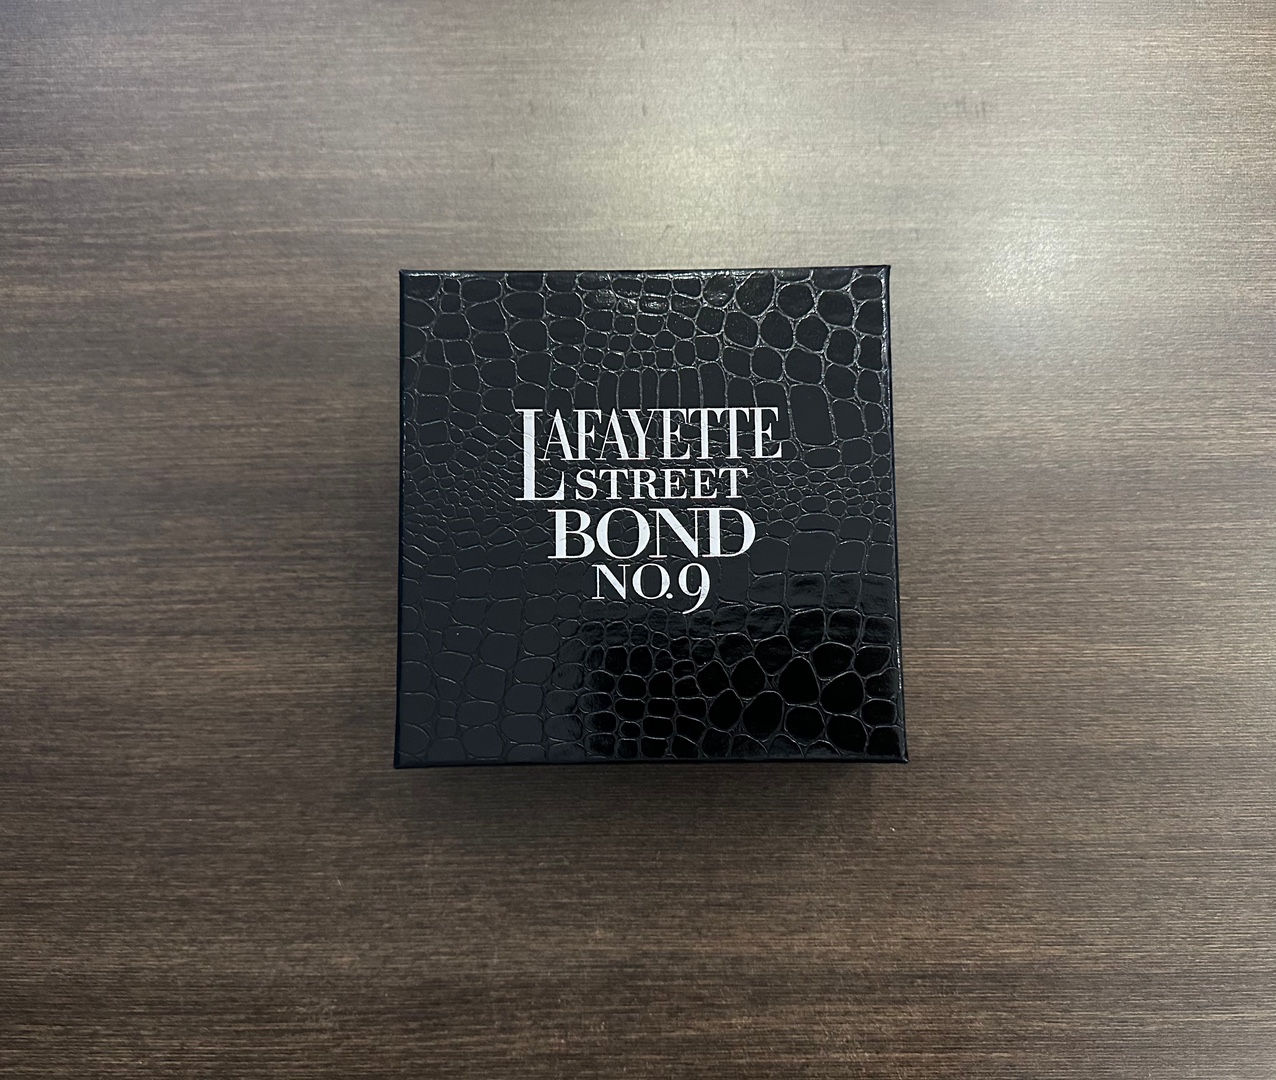 joyas, relojes y accesorios - Perfume Bond No.9 NYC LAFAYETTE STREET 100ML Original RD$ 17,000 NEG 0